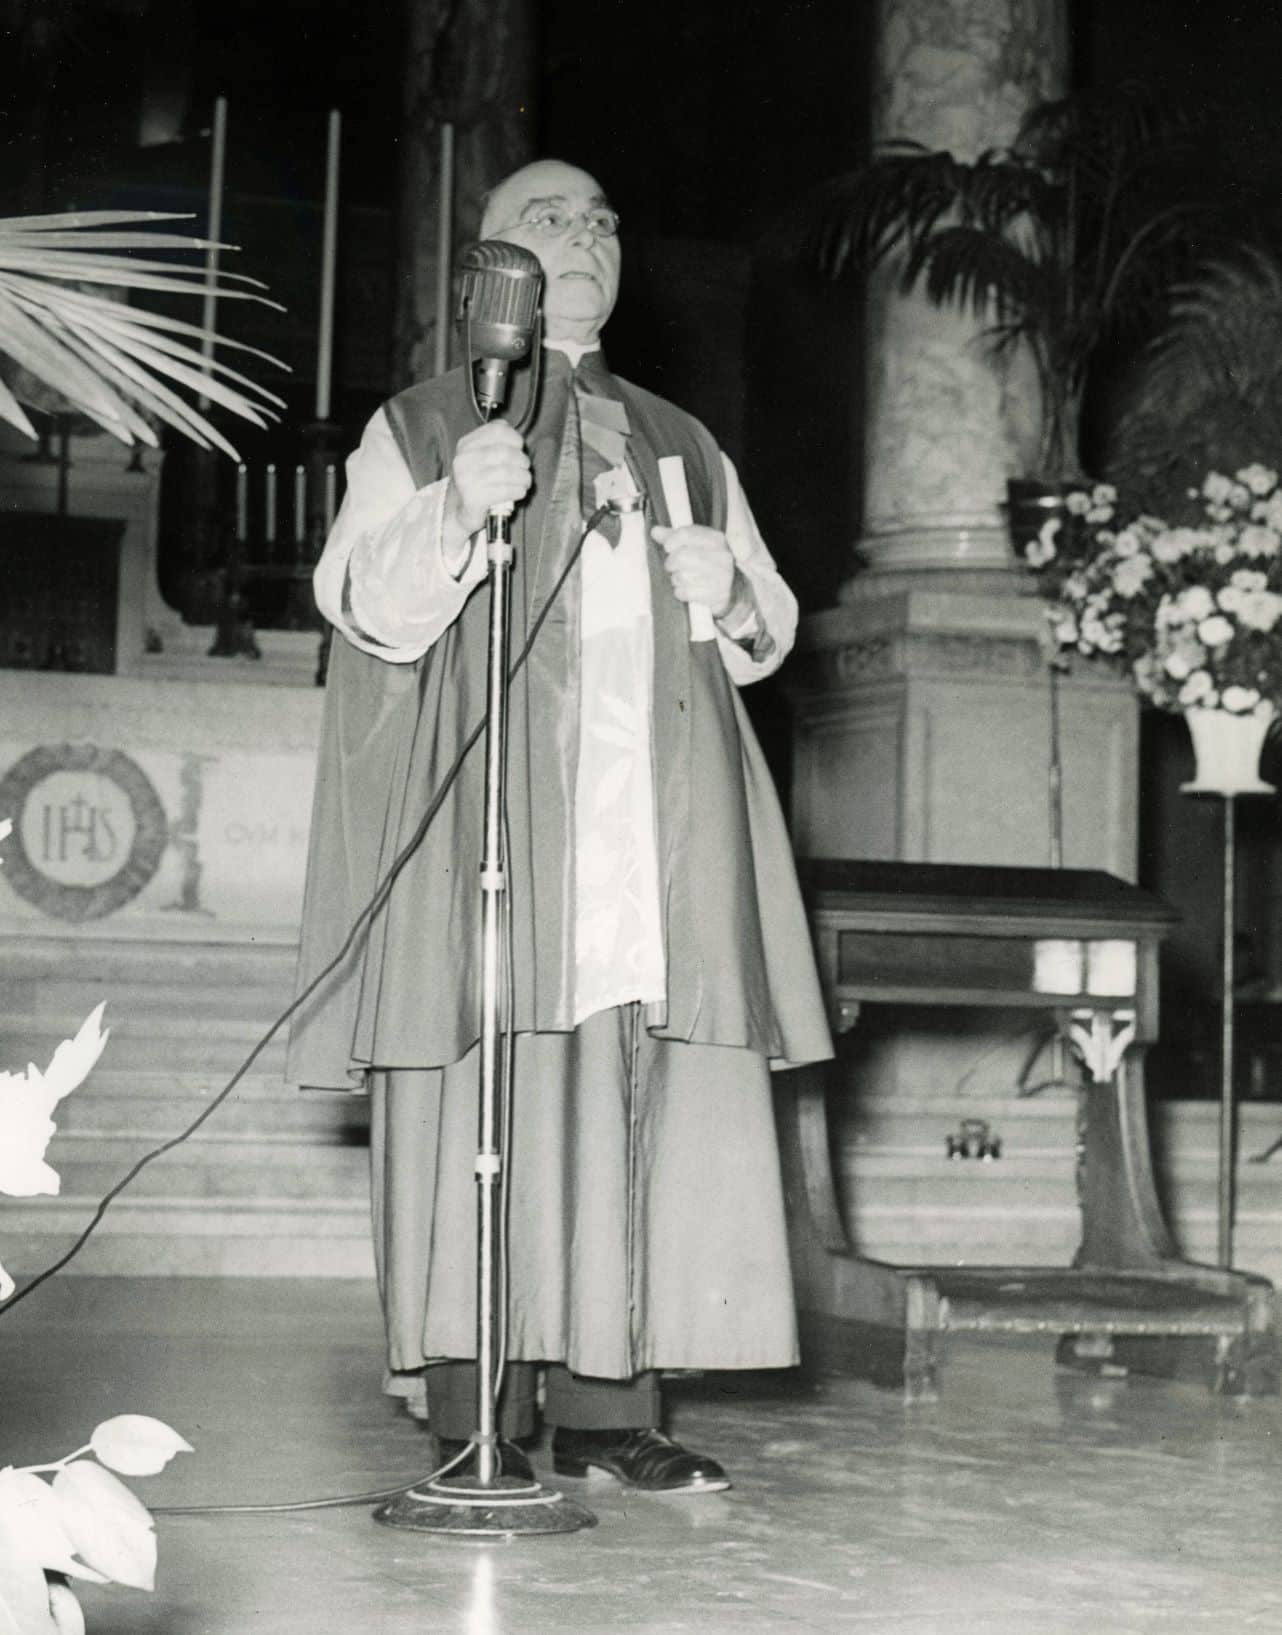 Reardon at Mic 1950